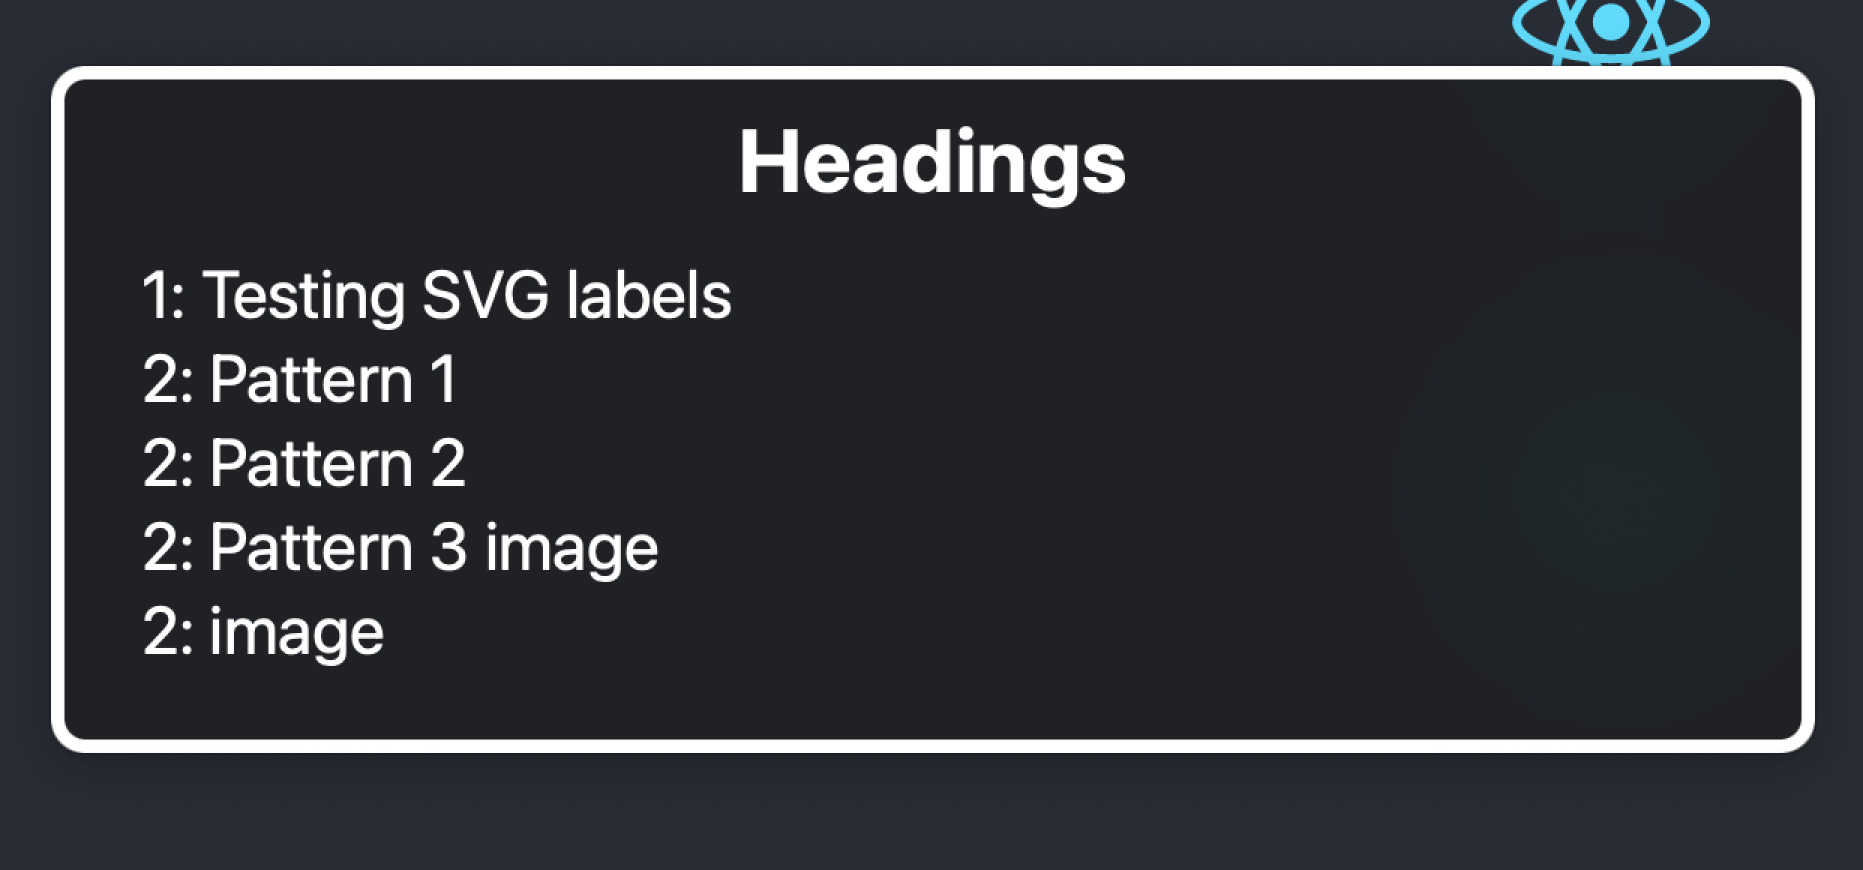 1: Testing SVG labels; 2: Pattern 1; 2: Pattern 2; 2: Pattern 3 image; 2: image